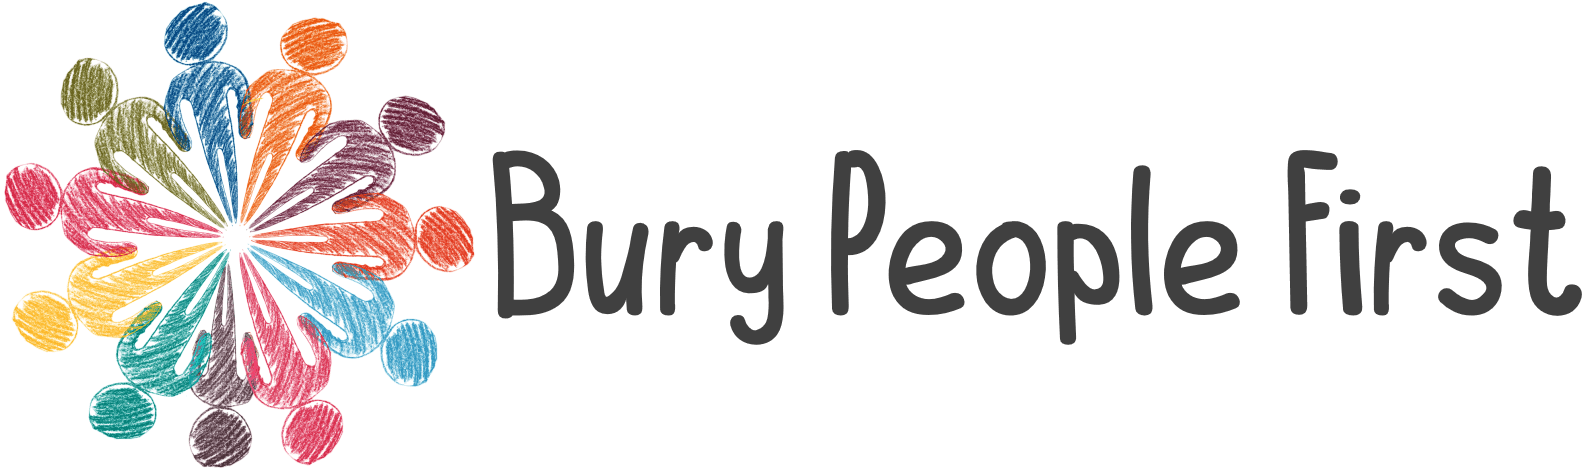 Bury People First Logo